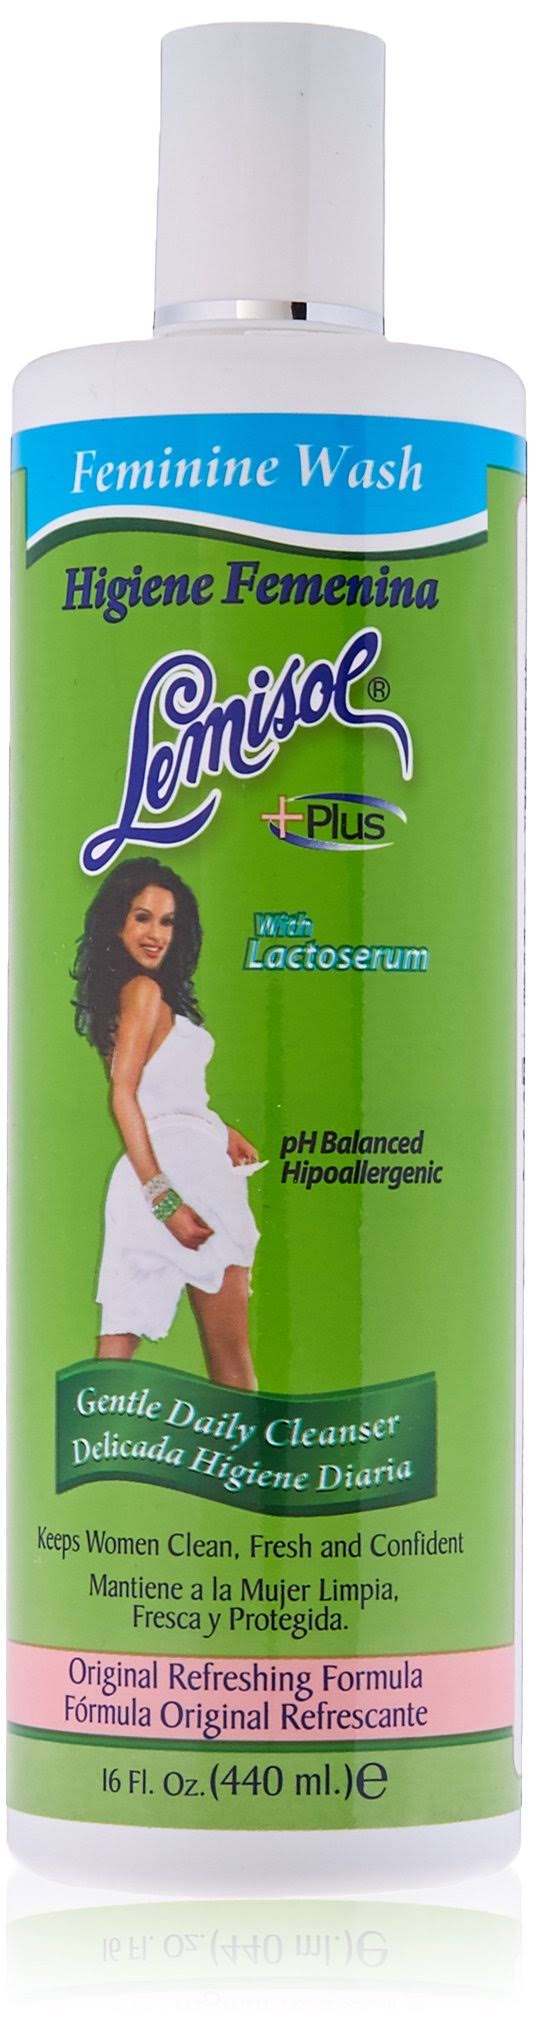 Lemisol Plus Feminine Wash Gentle Daily Cleanser - 440ml